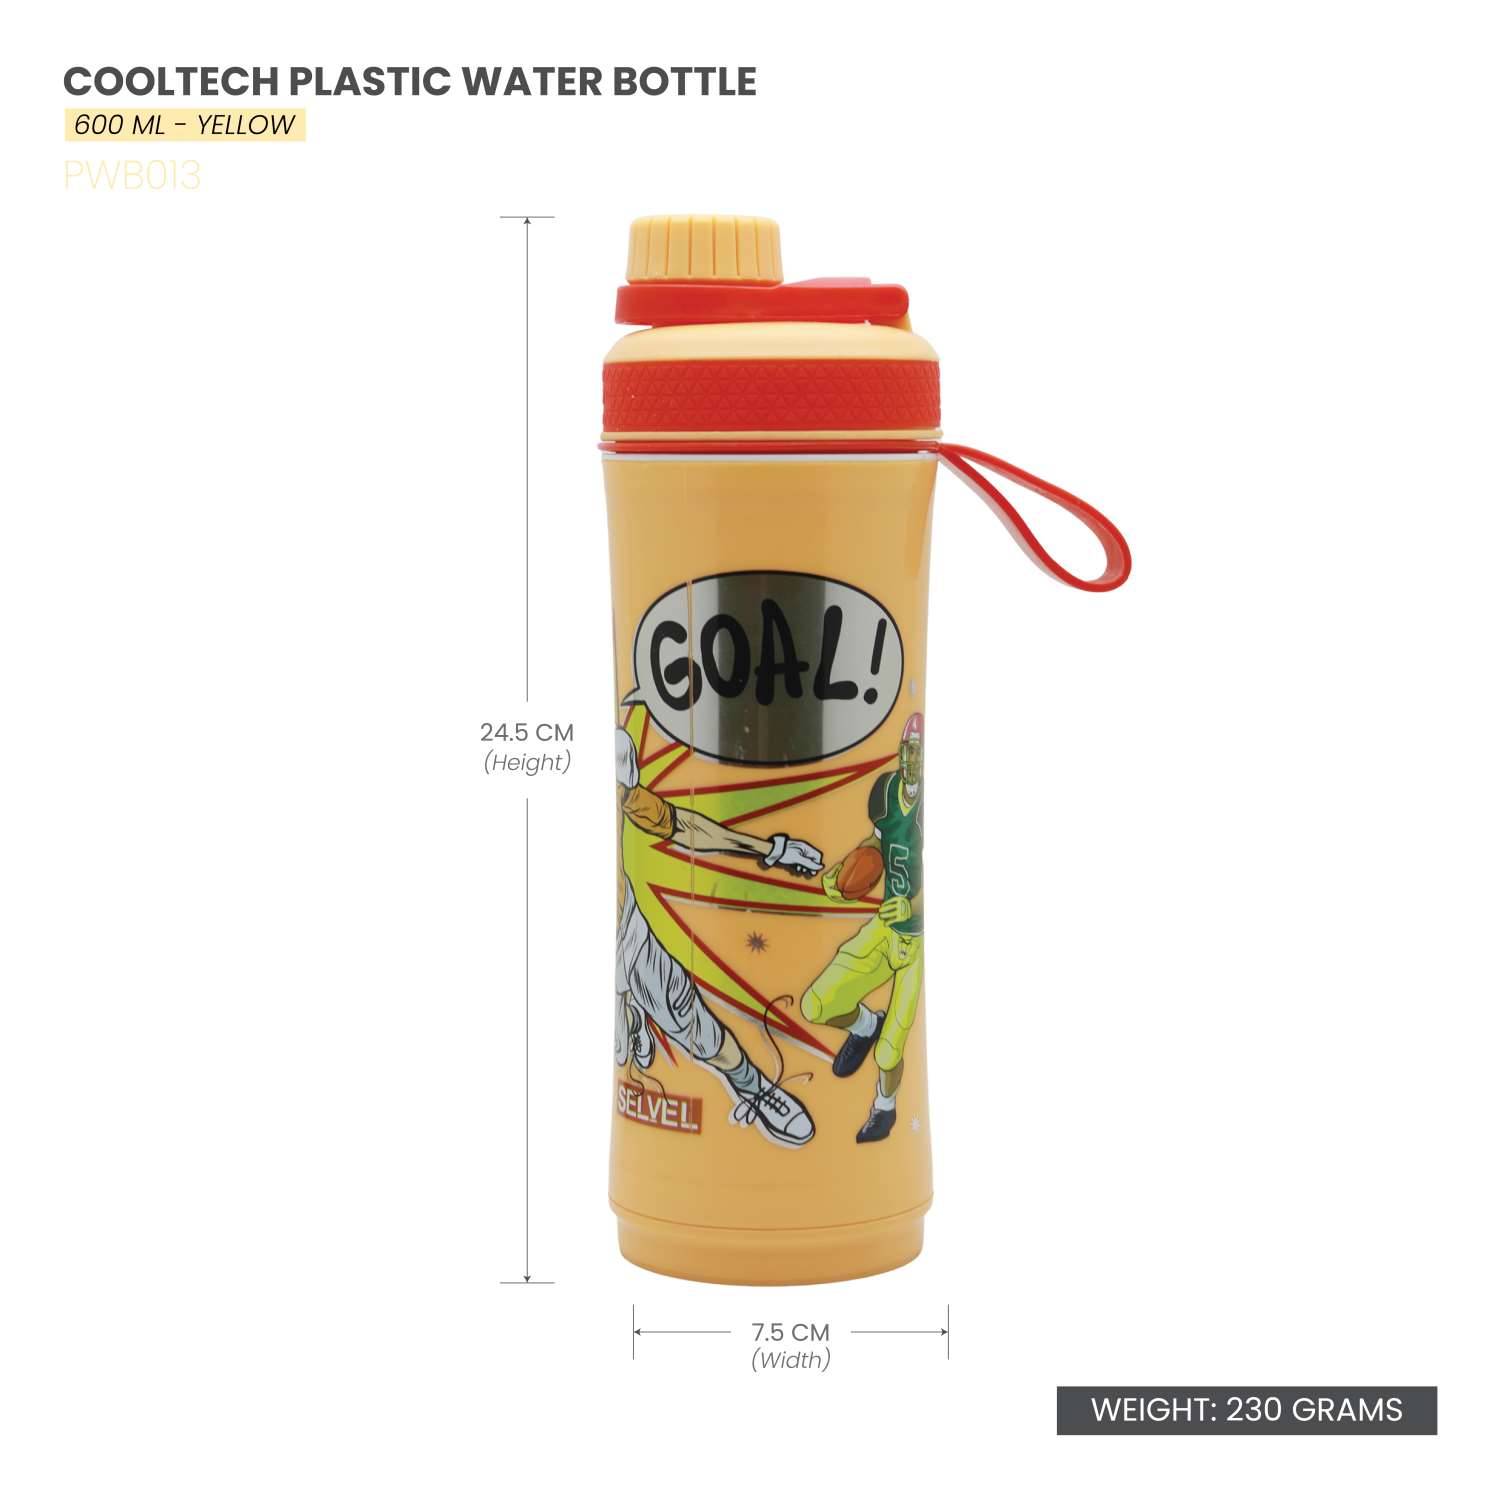 Selvel Cooltech Plastic Water Bottle Yellow 600Ml